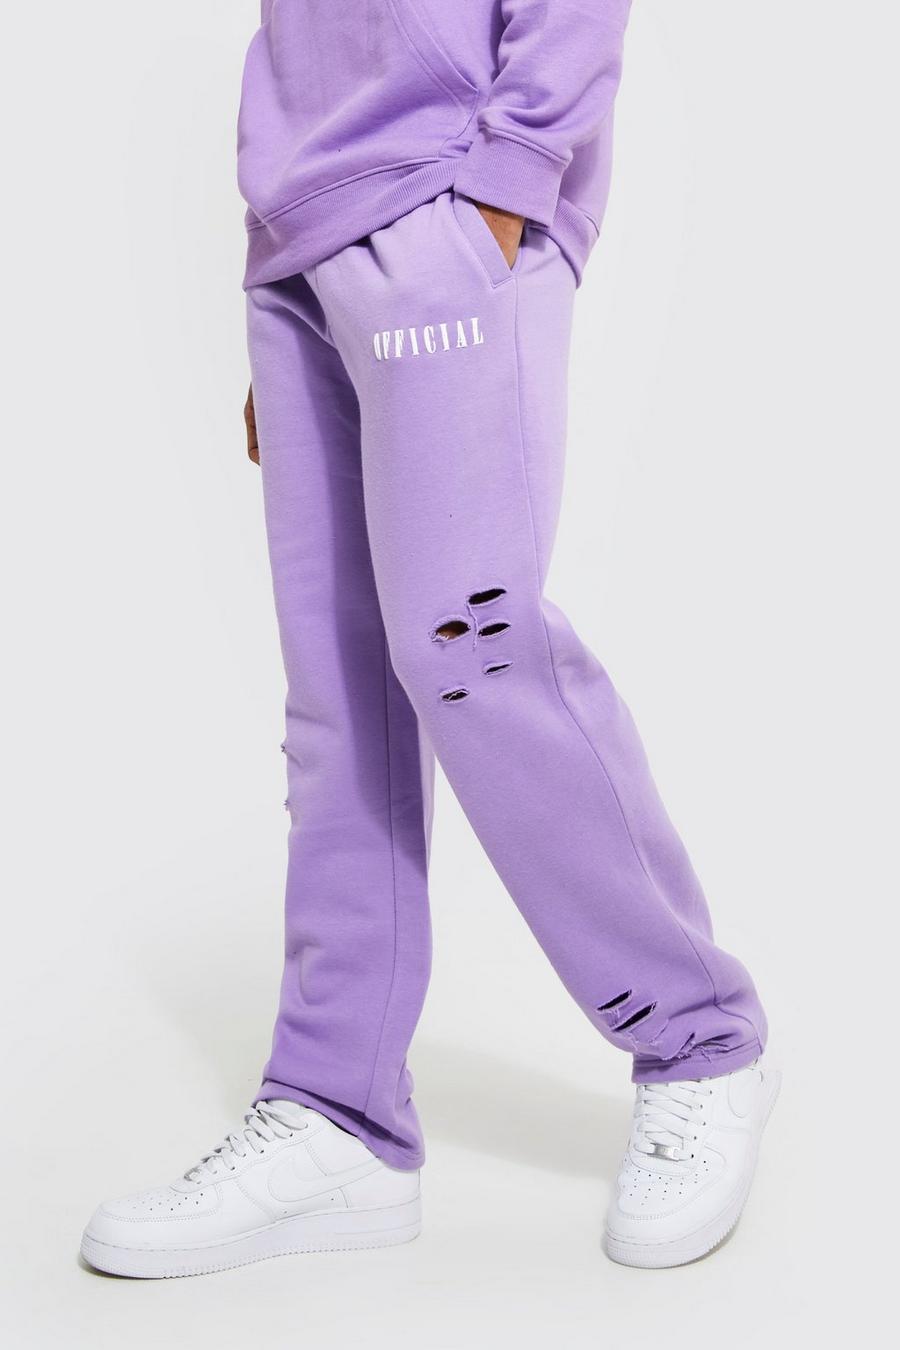 Pantaloni tuta a gamba ampia Official oversize effetto smagliato, Lilac viola image number 1